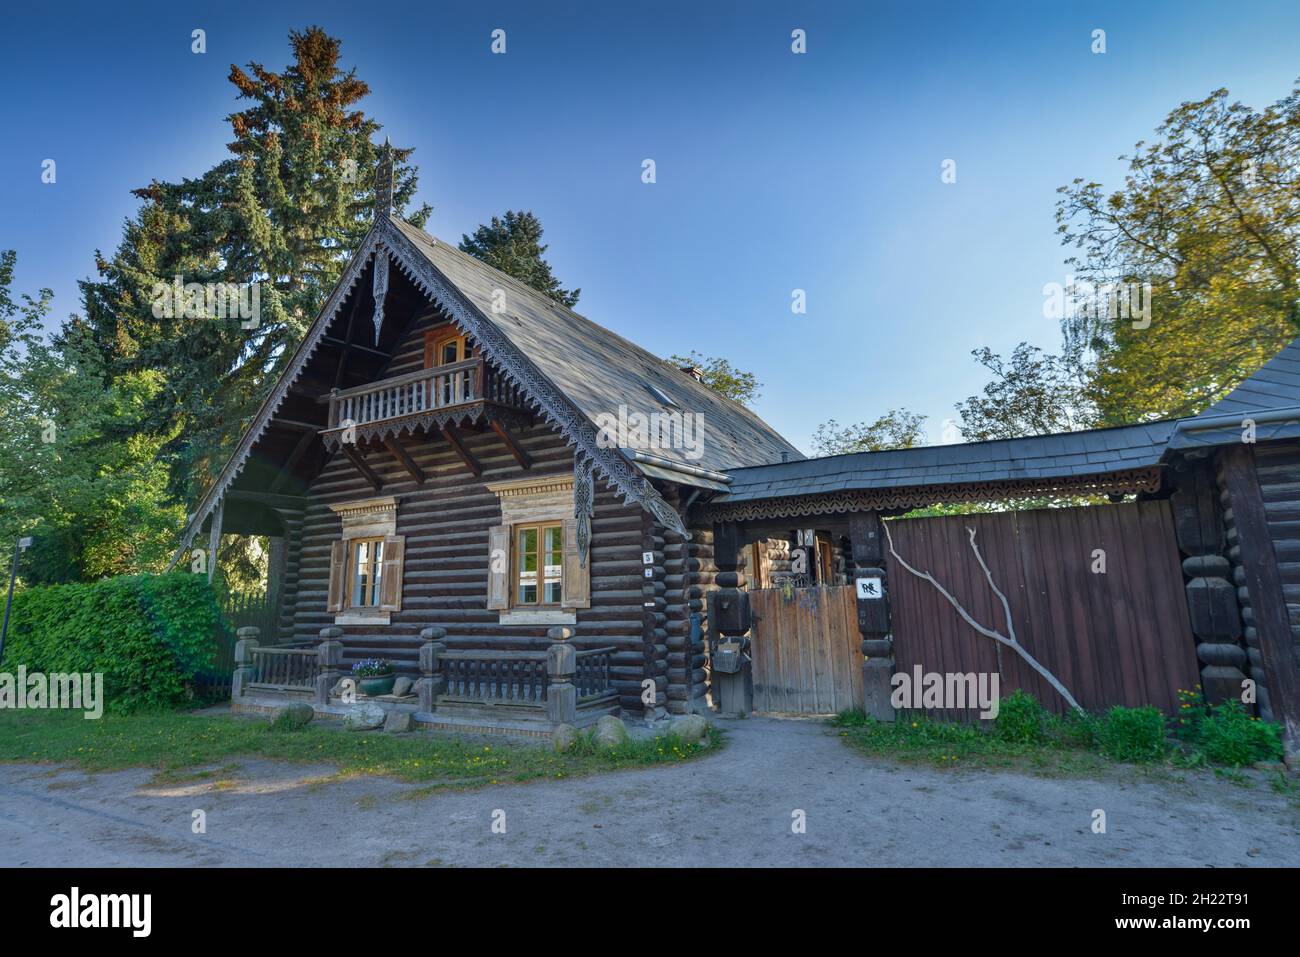 Casa di legno, Colonia russa Alexandrowka, Potsdam, Brandeburgo, Germania Foto Stock